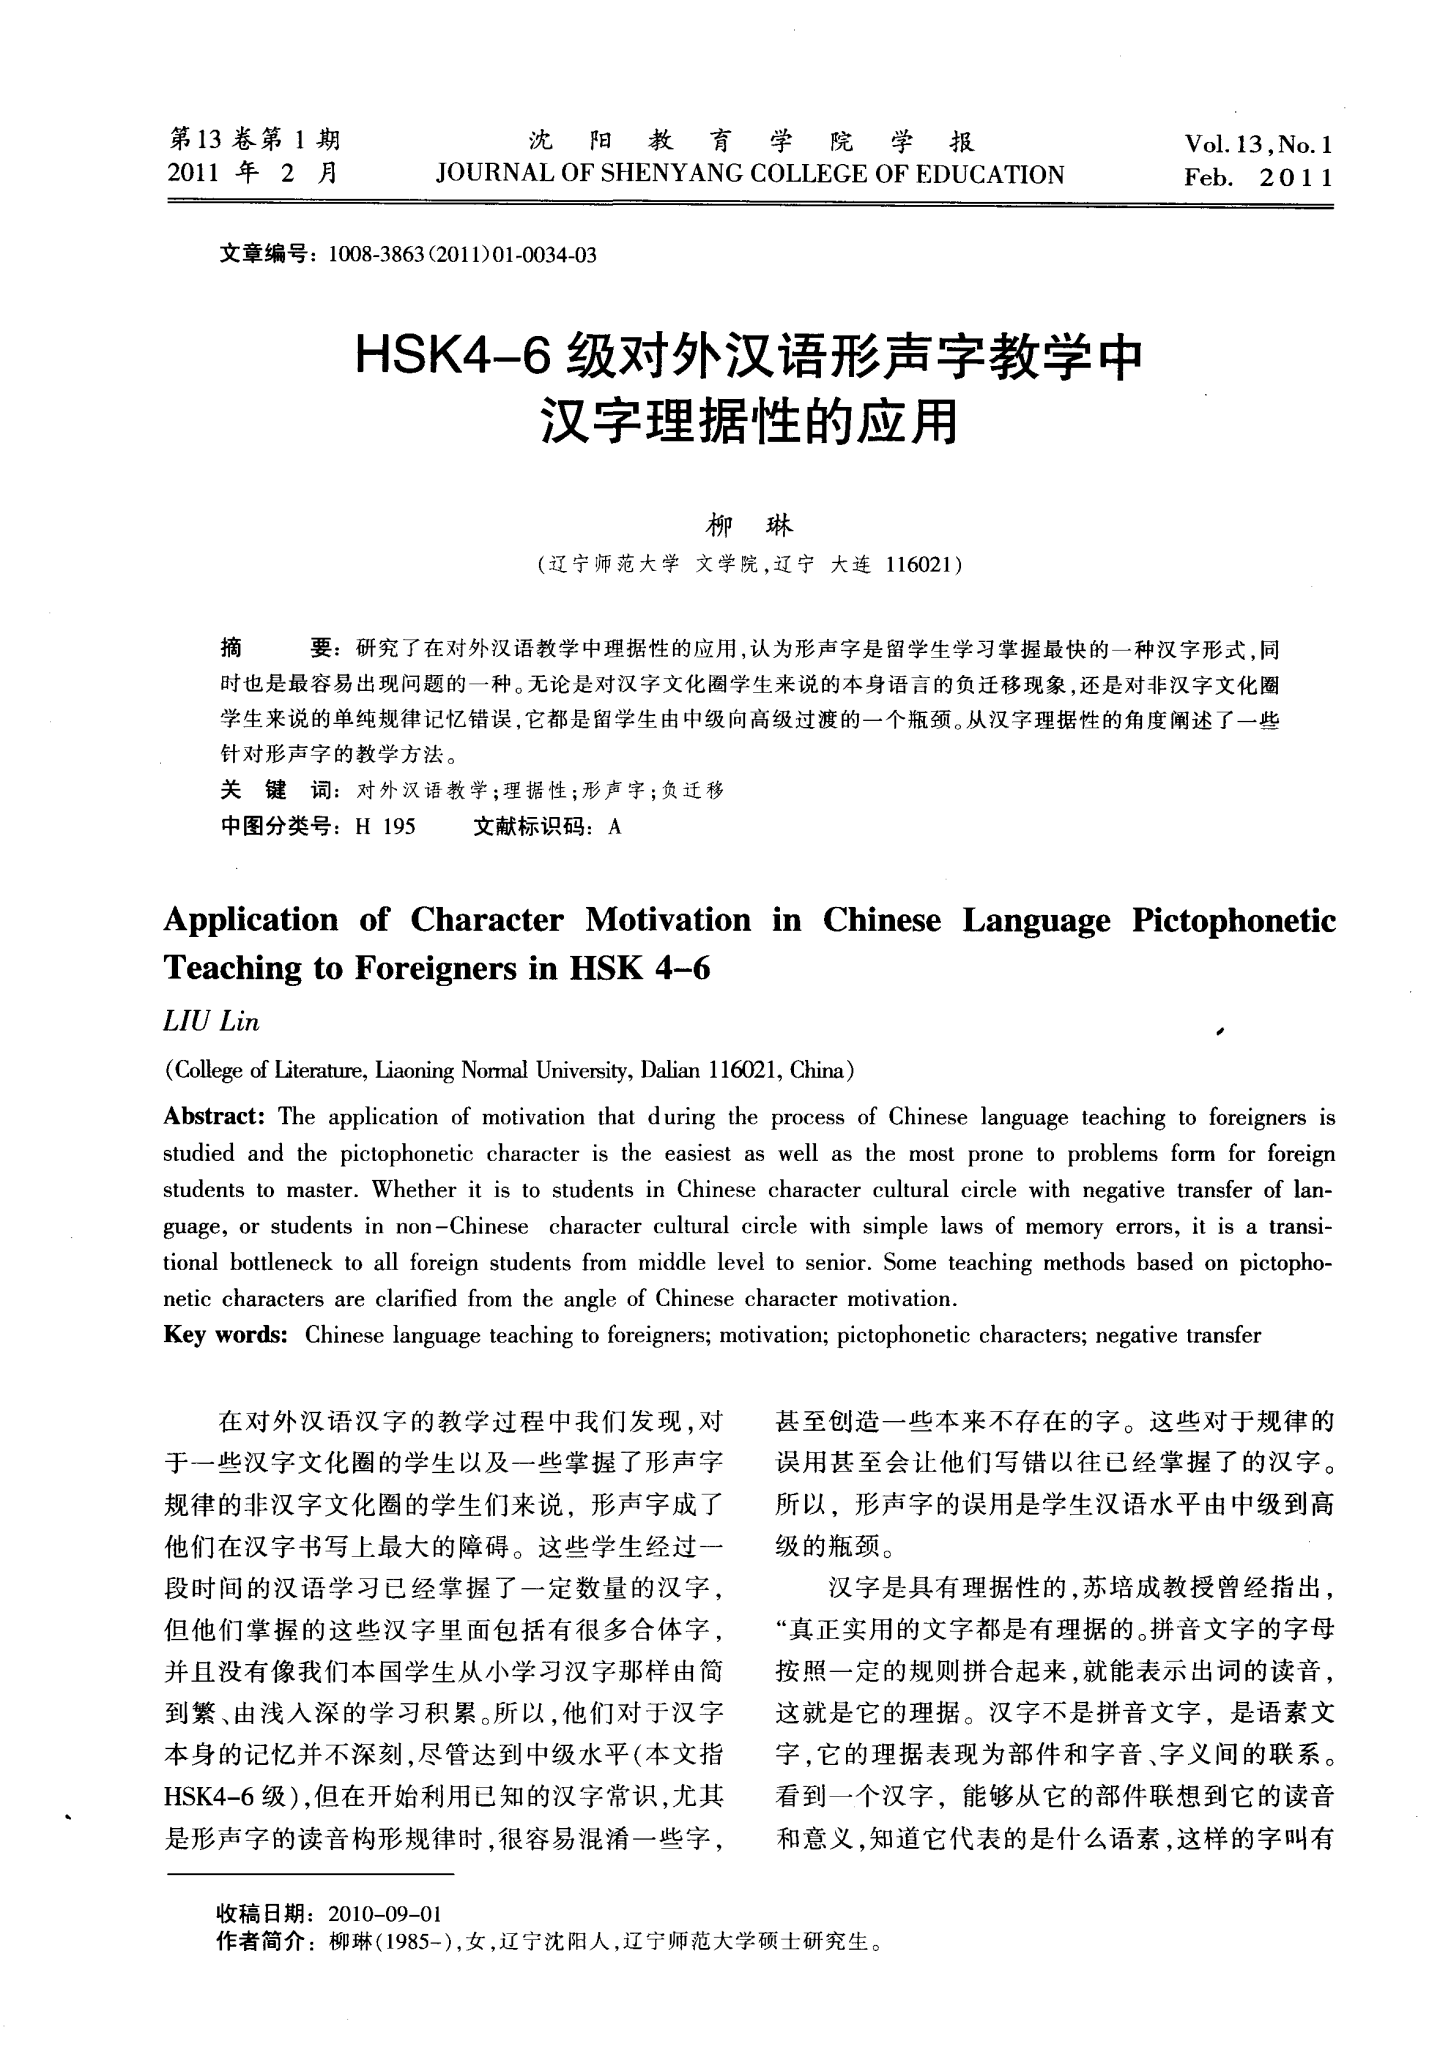 HSK4—6级对外汉语形声字教学中汉字理据性的应用